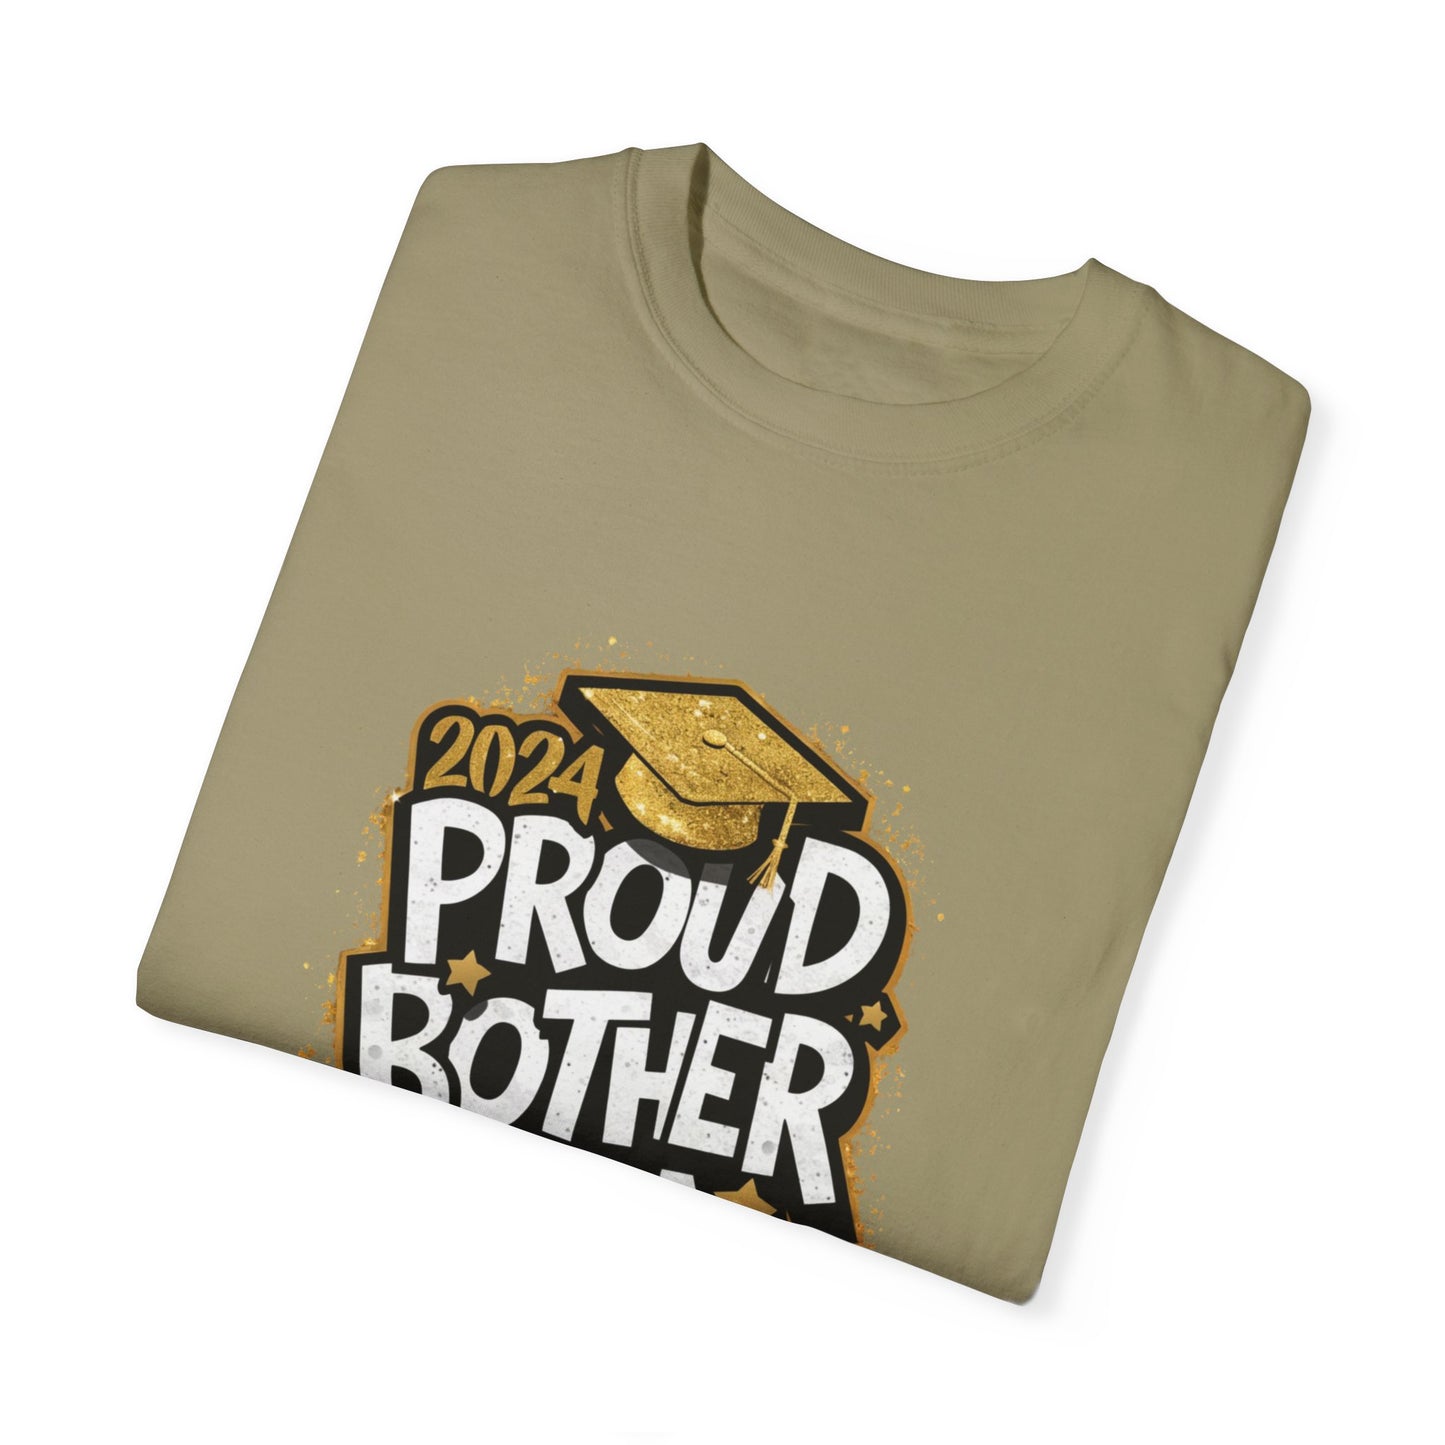 Proud Brother of a 2024 Graduate Unisex Garment-dyed T-shirt Cotton Funny Humorous Graphic Soft Premium Unisex Men Women Khaki T-shirt Birthday Gift-47